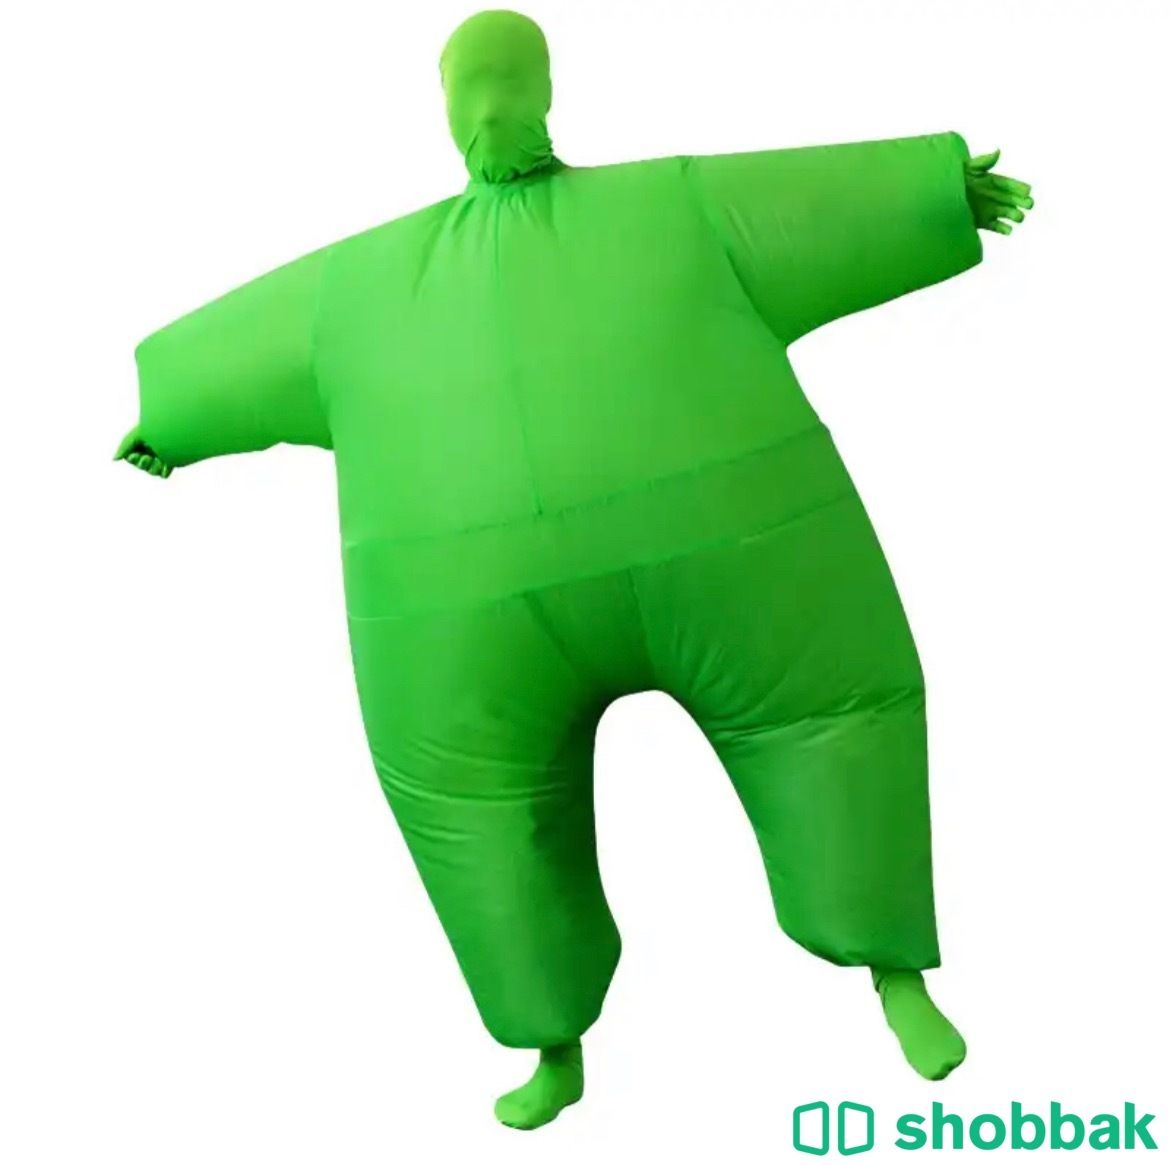 لبس تنكري قابل للنفخ Shobbak Saudi Arabia